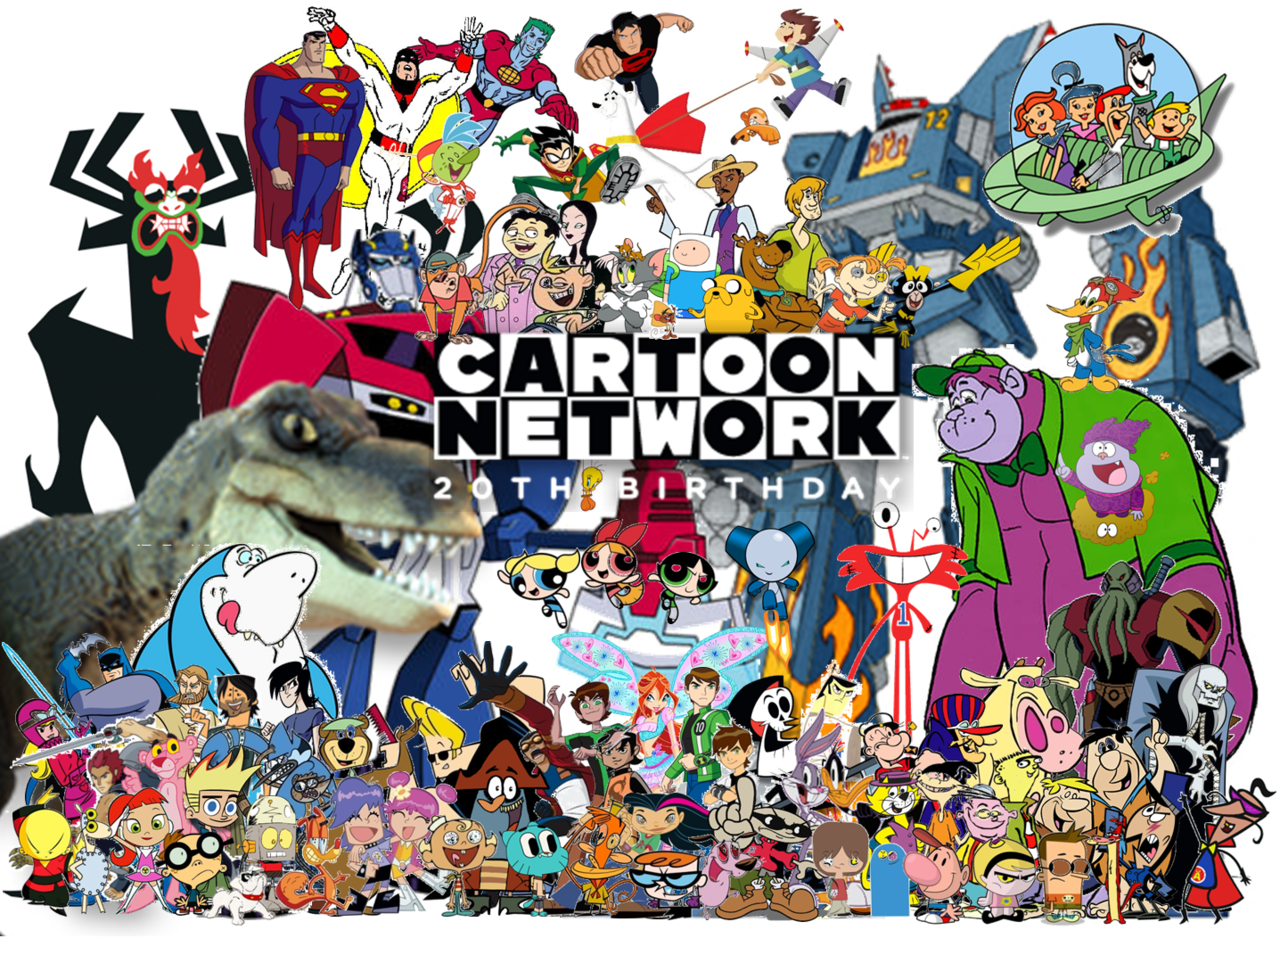  cartoons oekaki fanart cartoons comics 2012 2013 hooon cartoon network